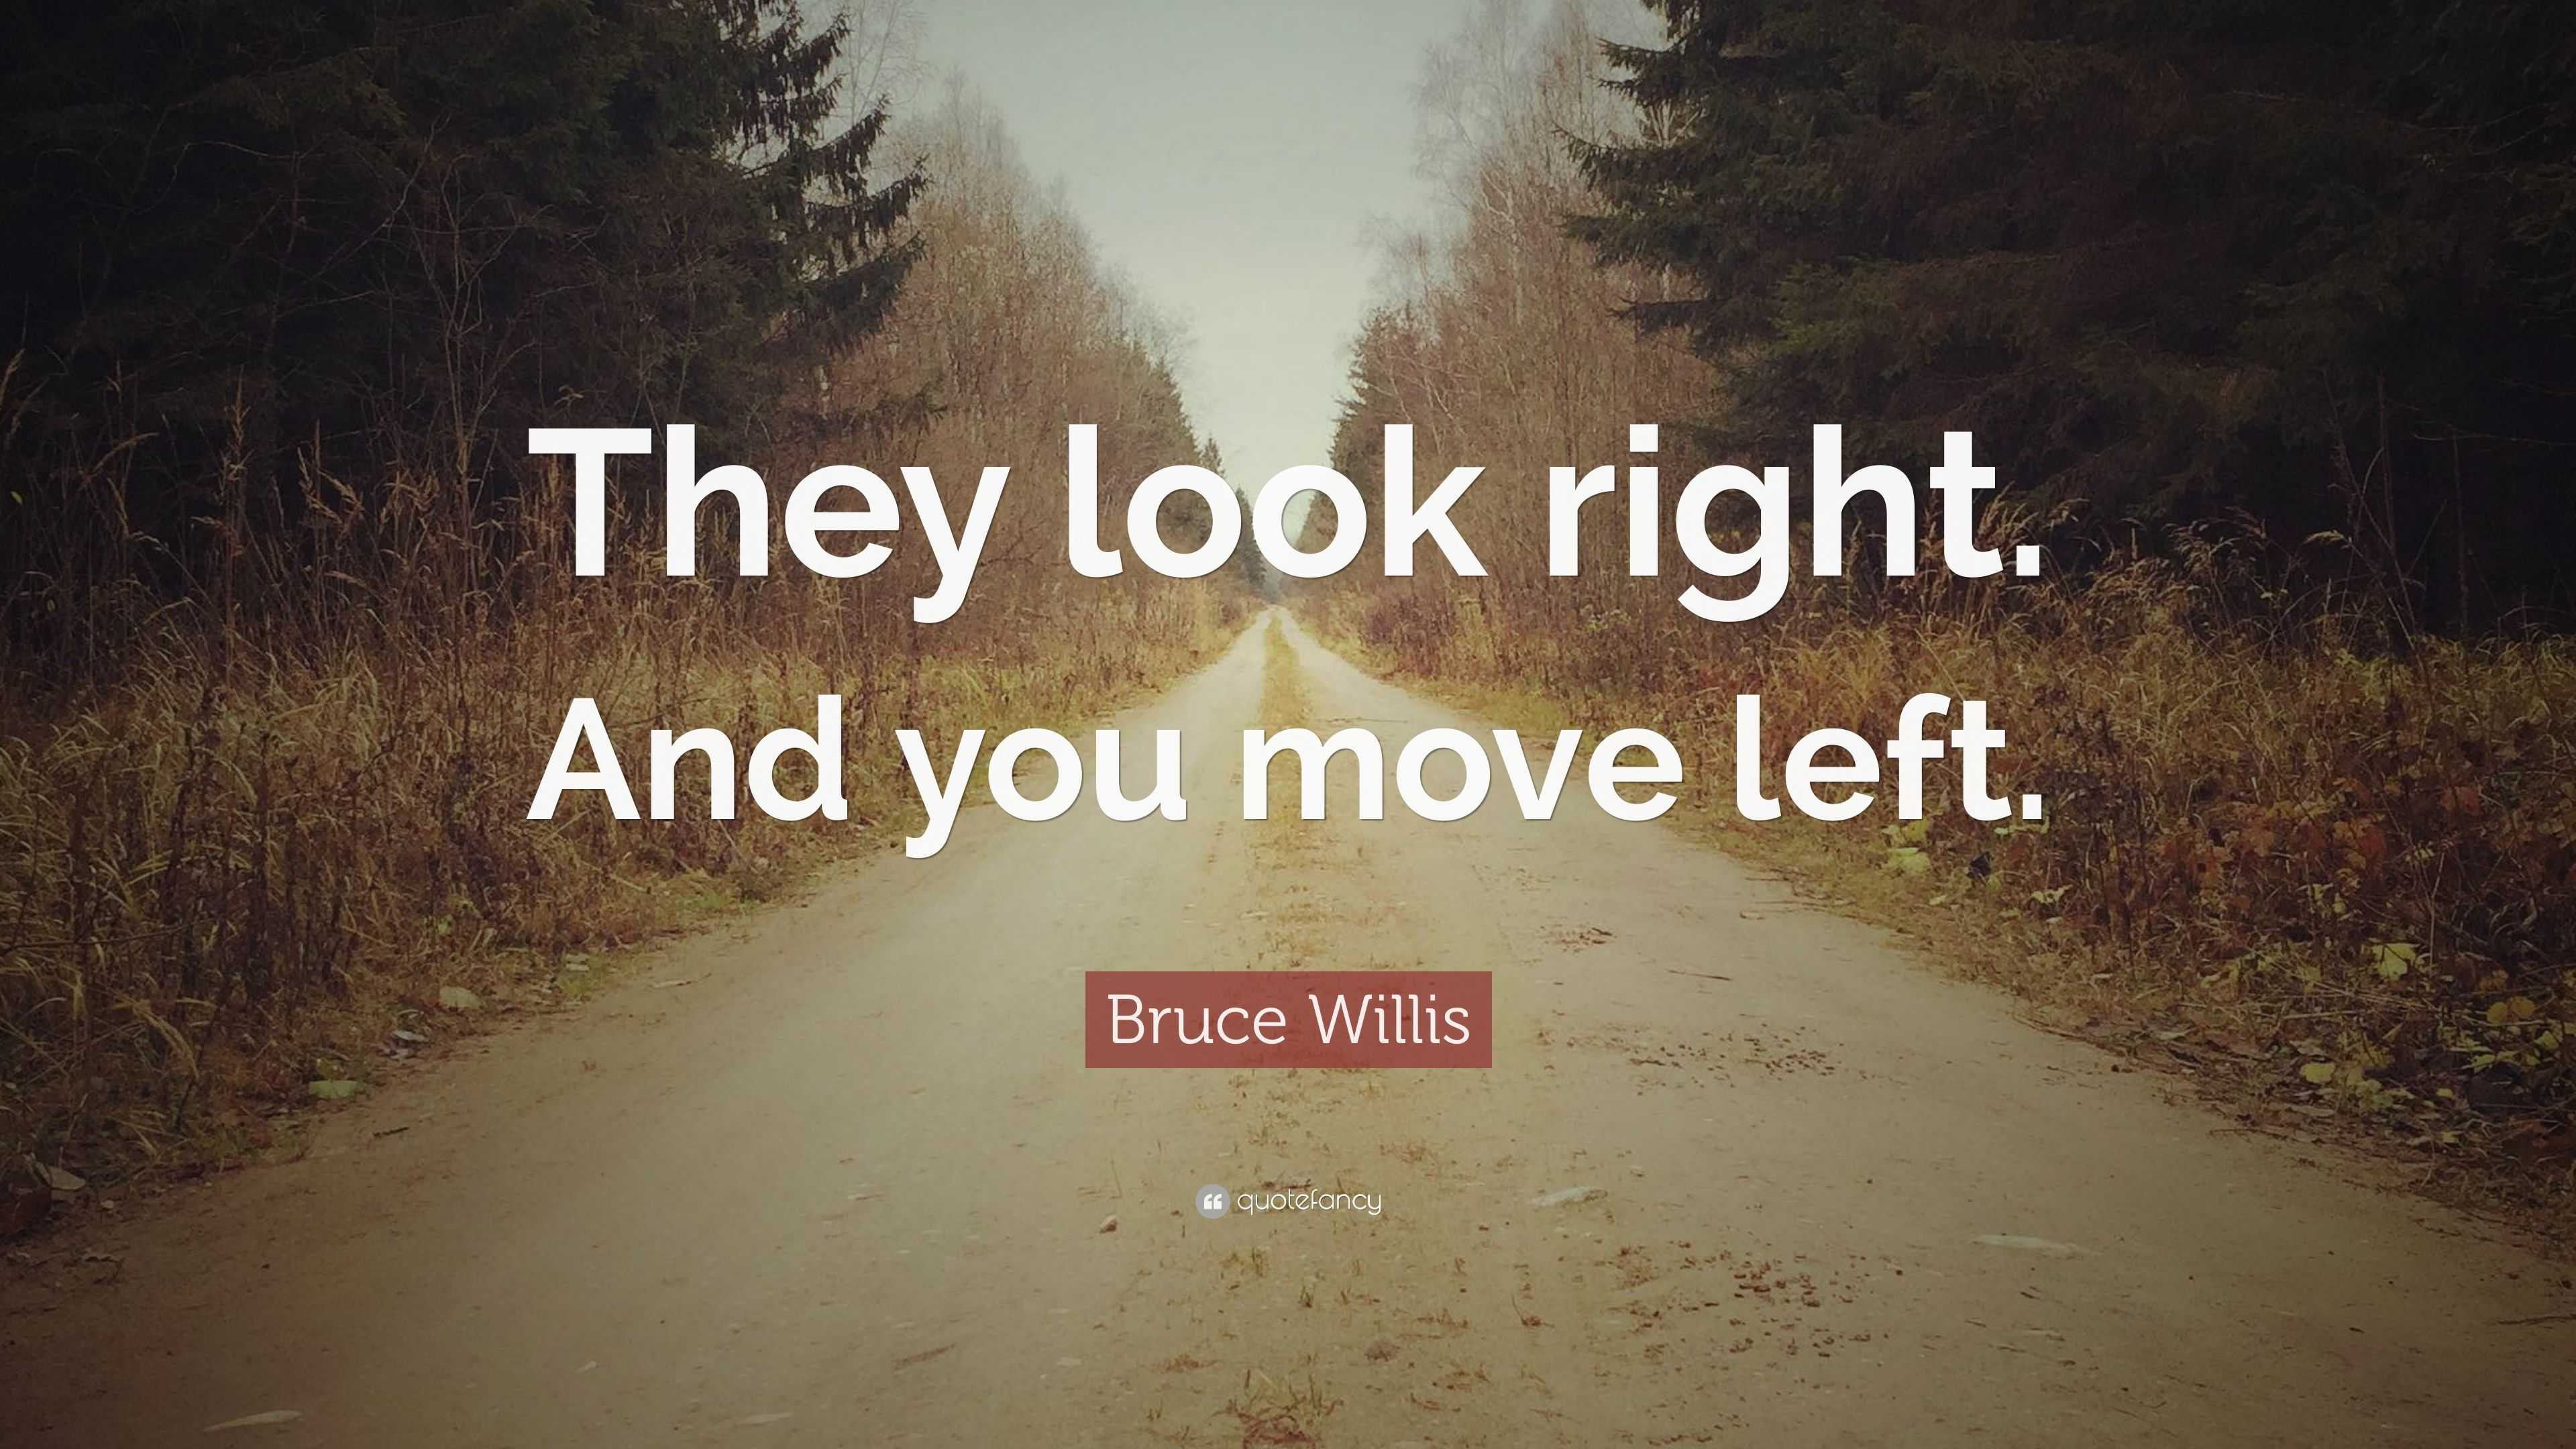 Move on! - Brush Willis